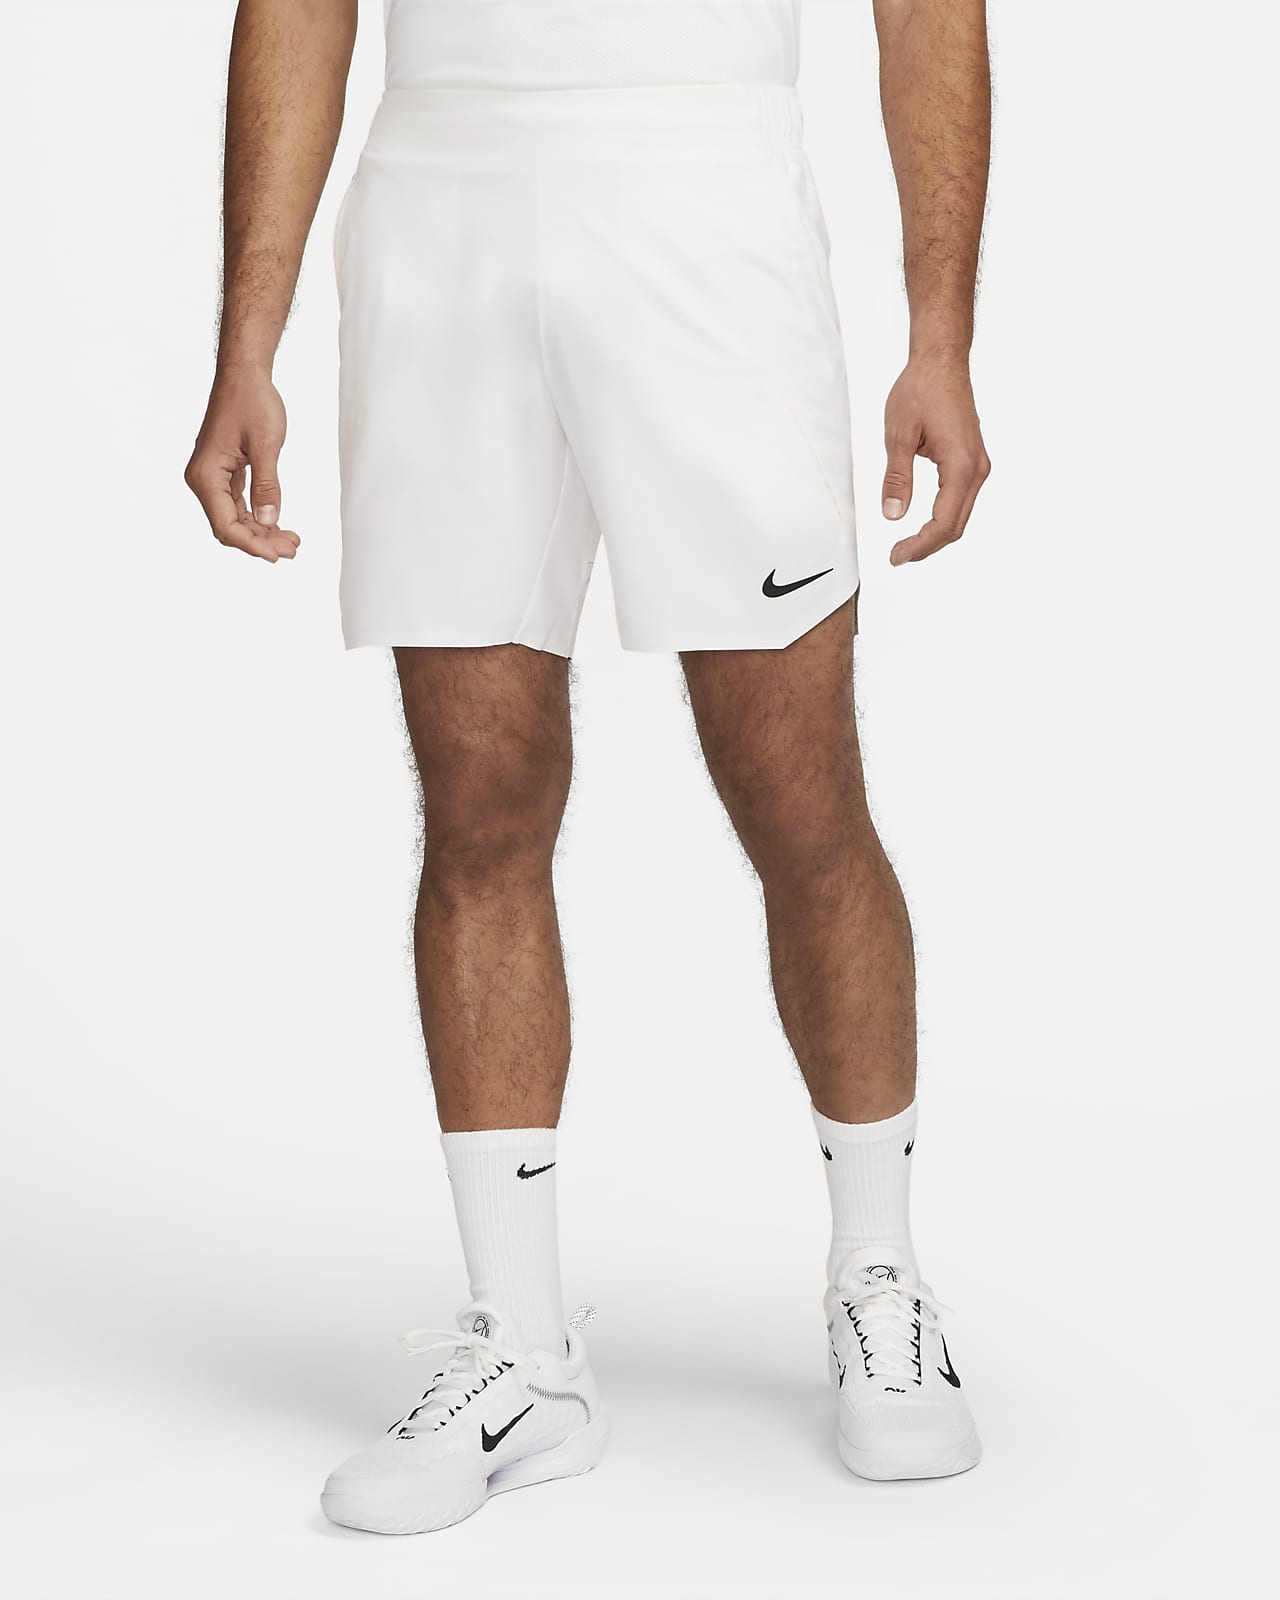 Polo by Ralph Lauren, Shorts, Polo Ralph Lauren Mens White Elastic Waist  Pockets Athletic Tennis Shorts Size L